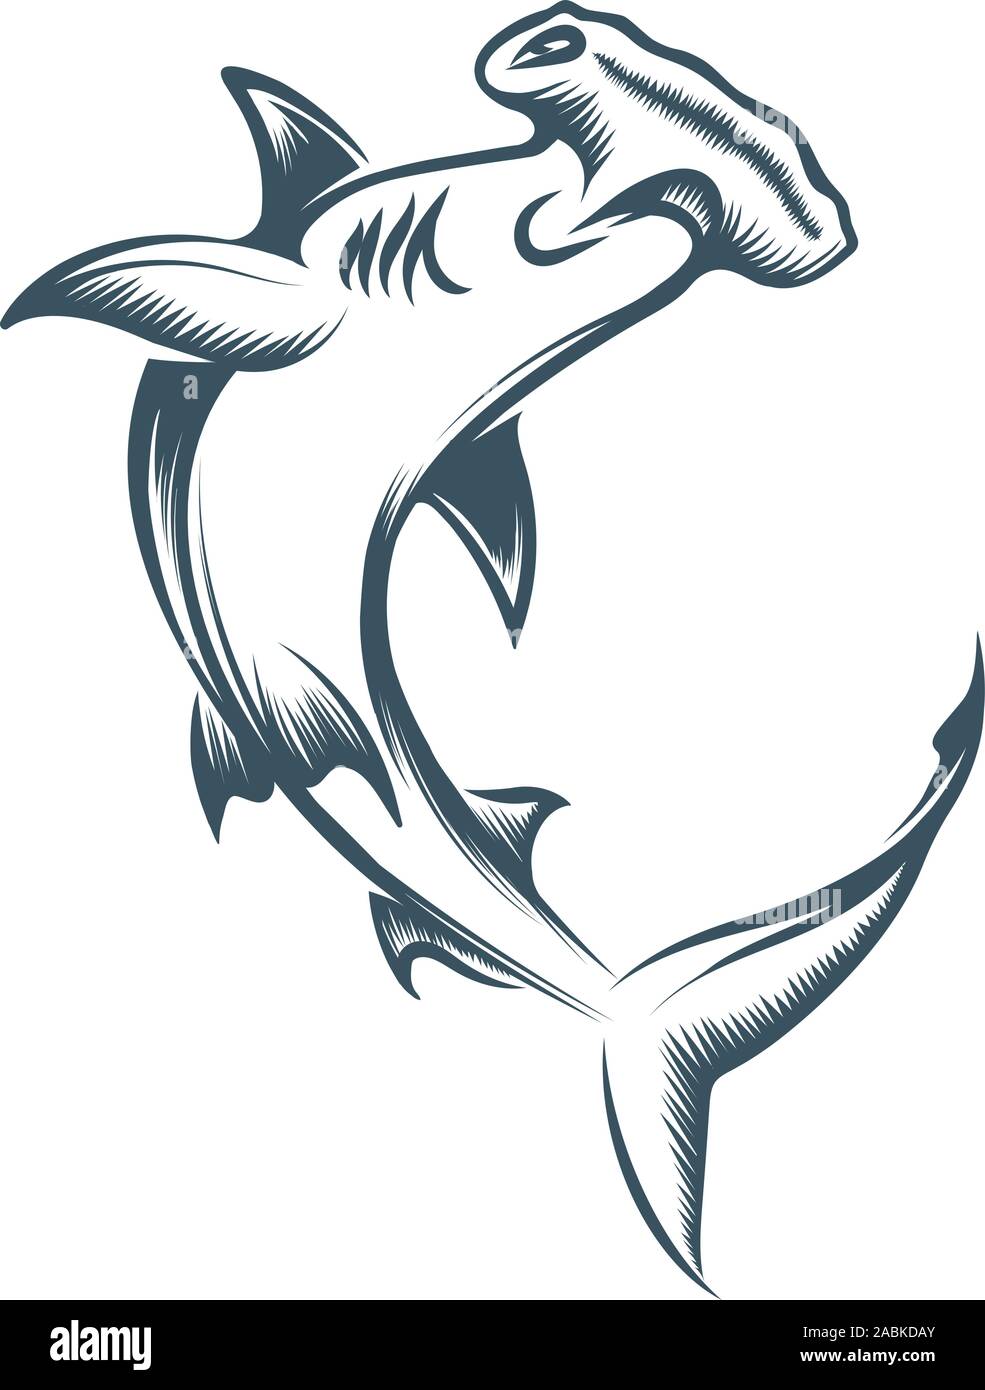 Hammerhead Shark Tattoo drawn in Engraving style. Vector illustration. Stock Vector